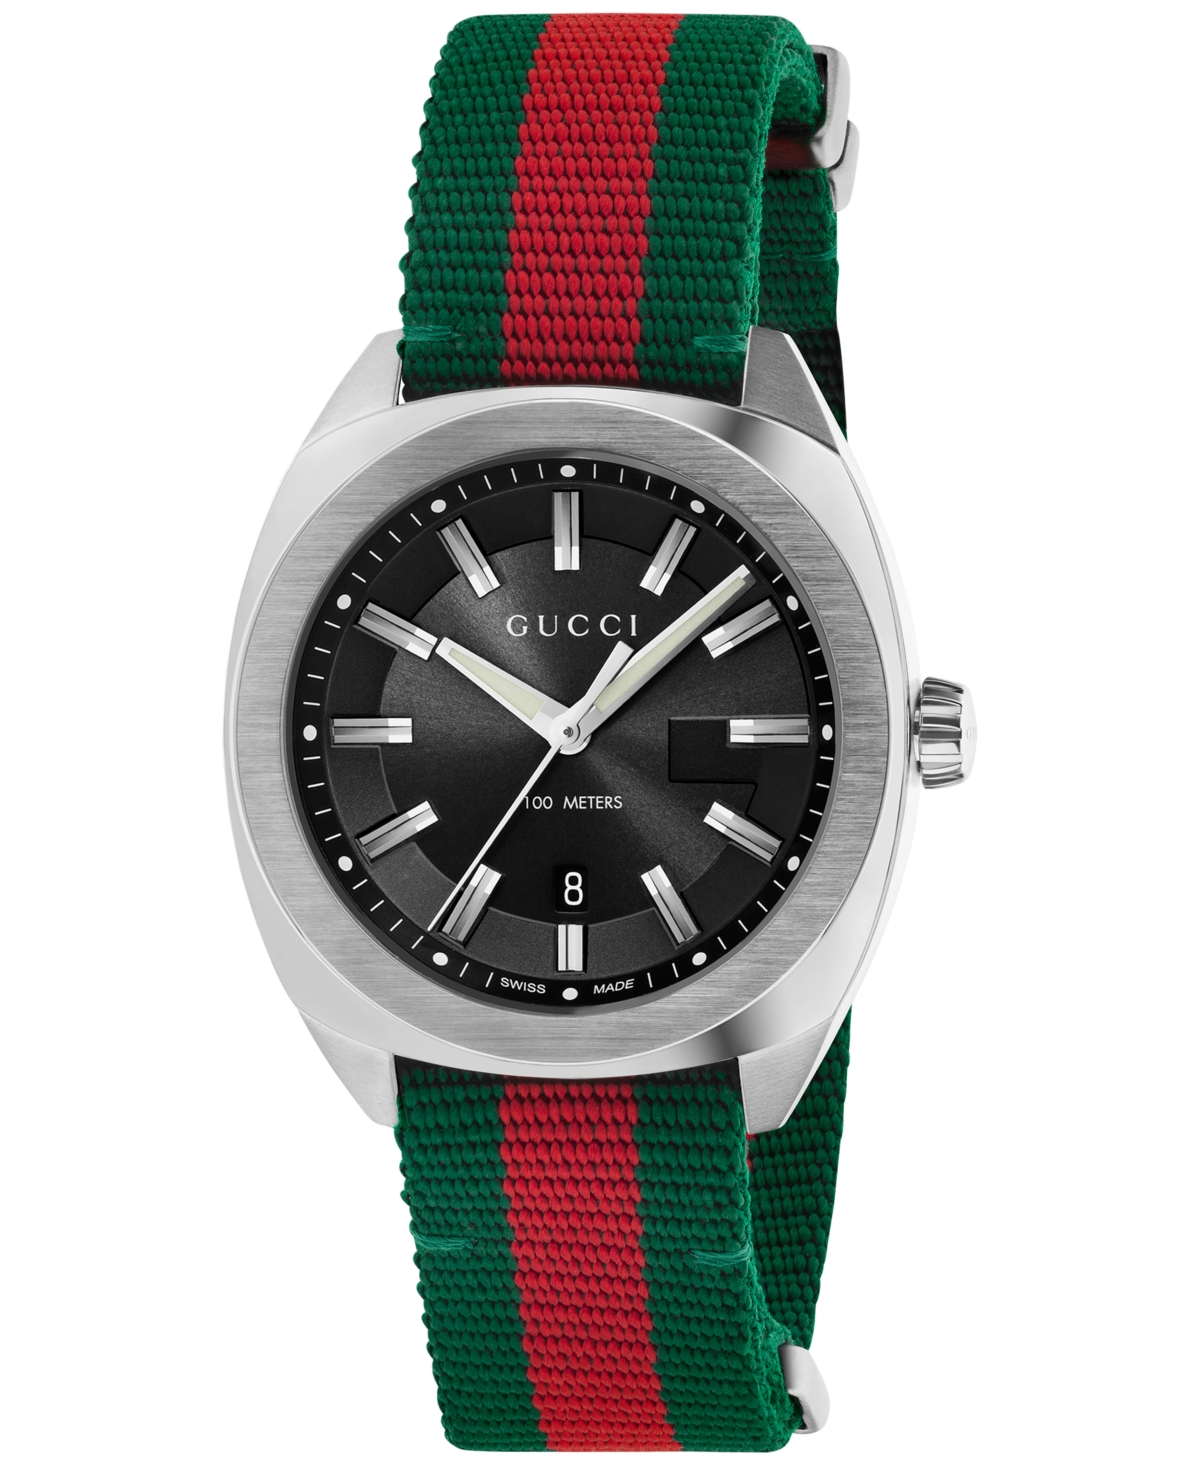 Men's GG2570 Swiss Green-Red-Green Web Nylon Strap Watch 41mm YA142305 - Green/Red